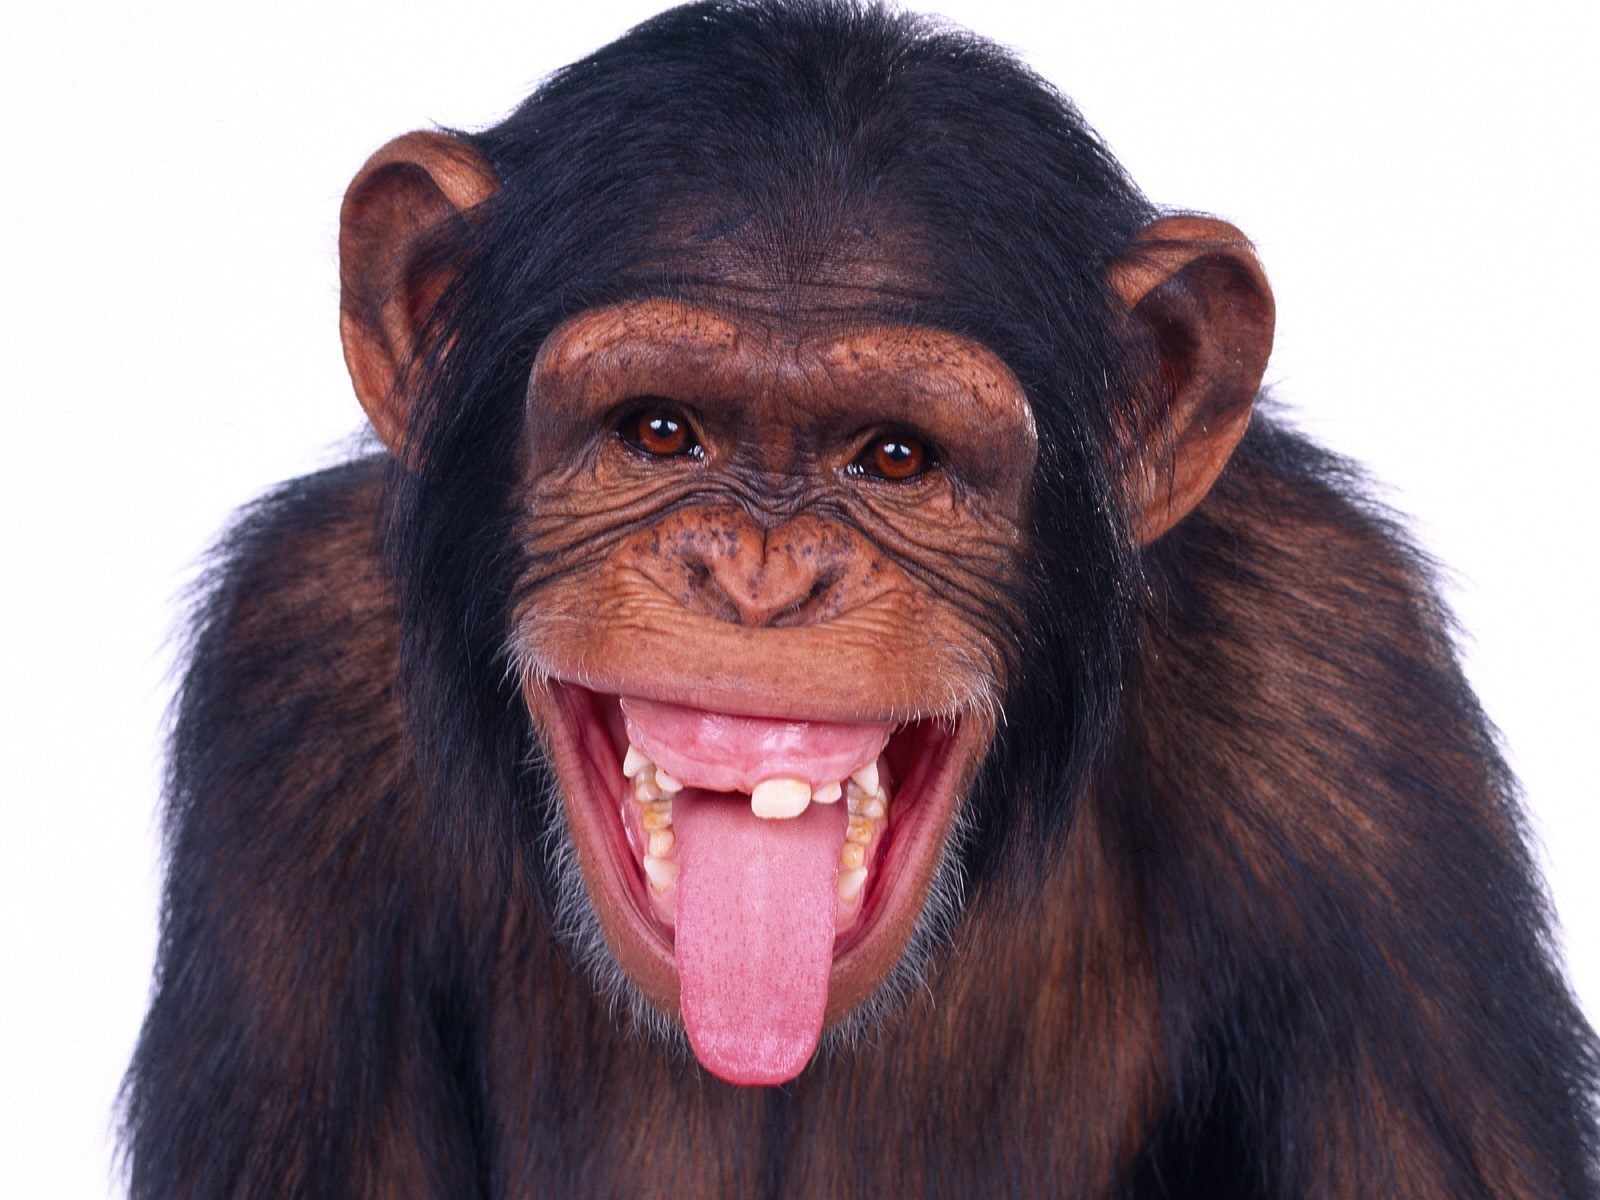 Chimpanzee HD Wallpaper Image Pictures Photos